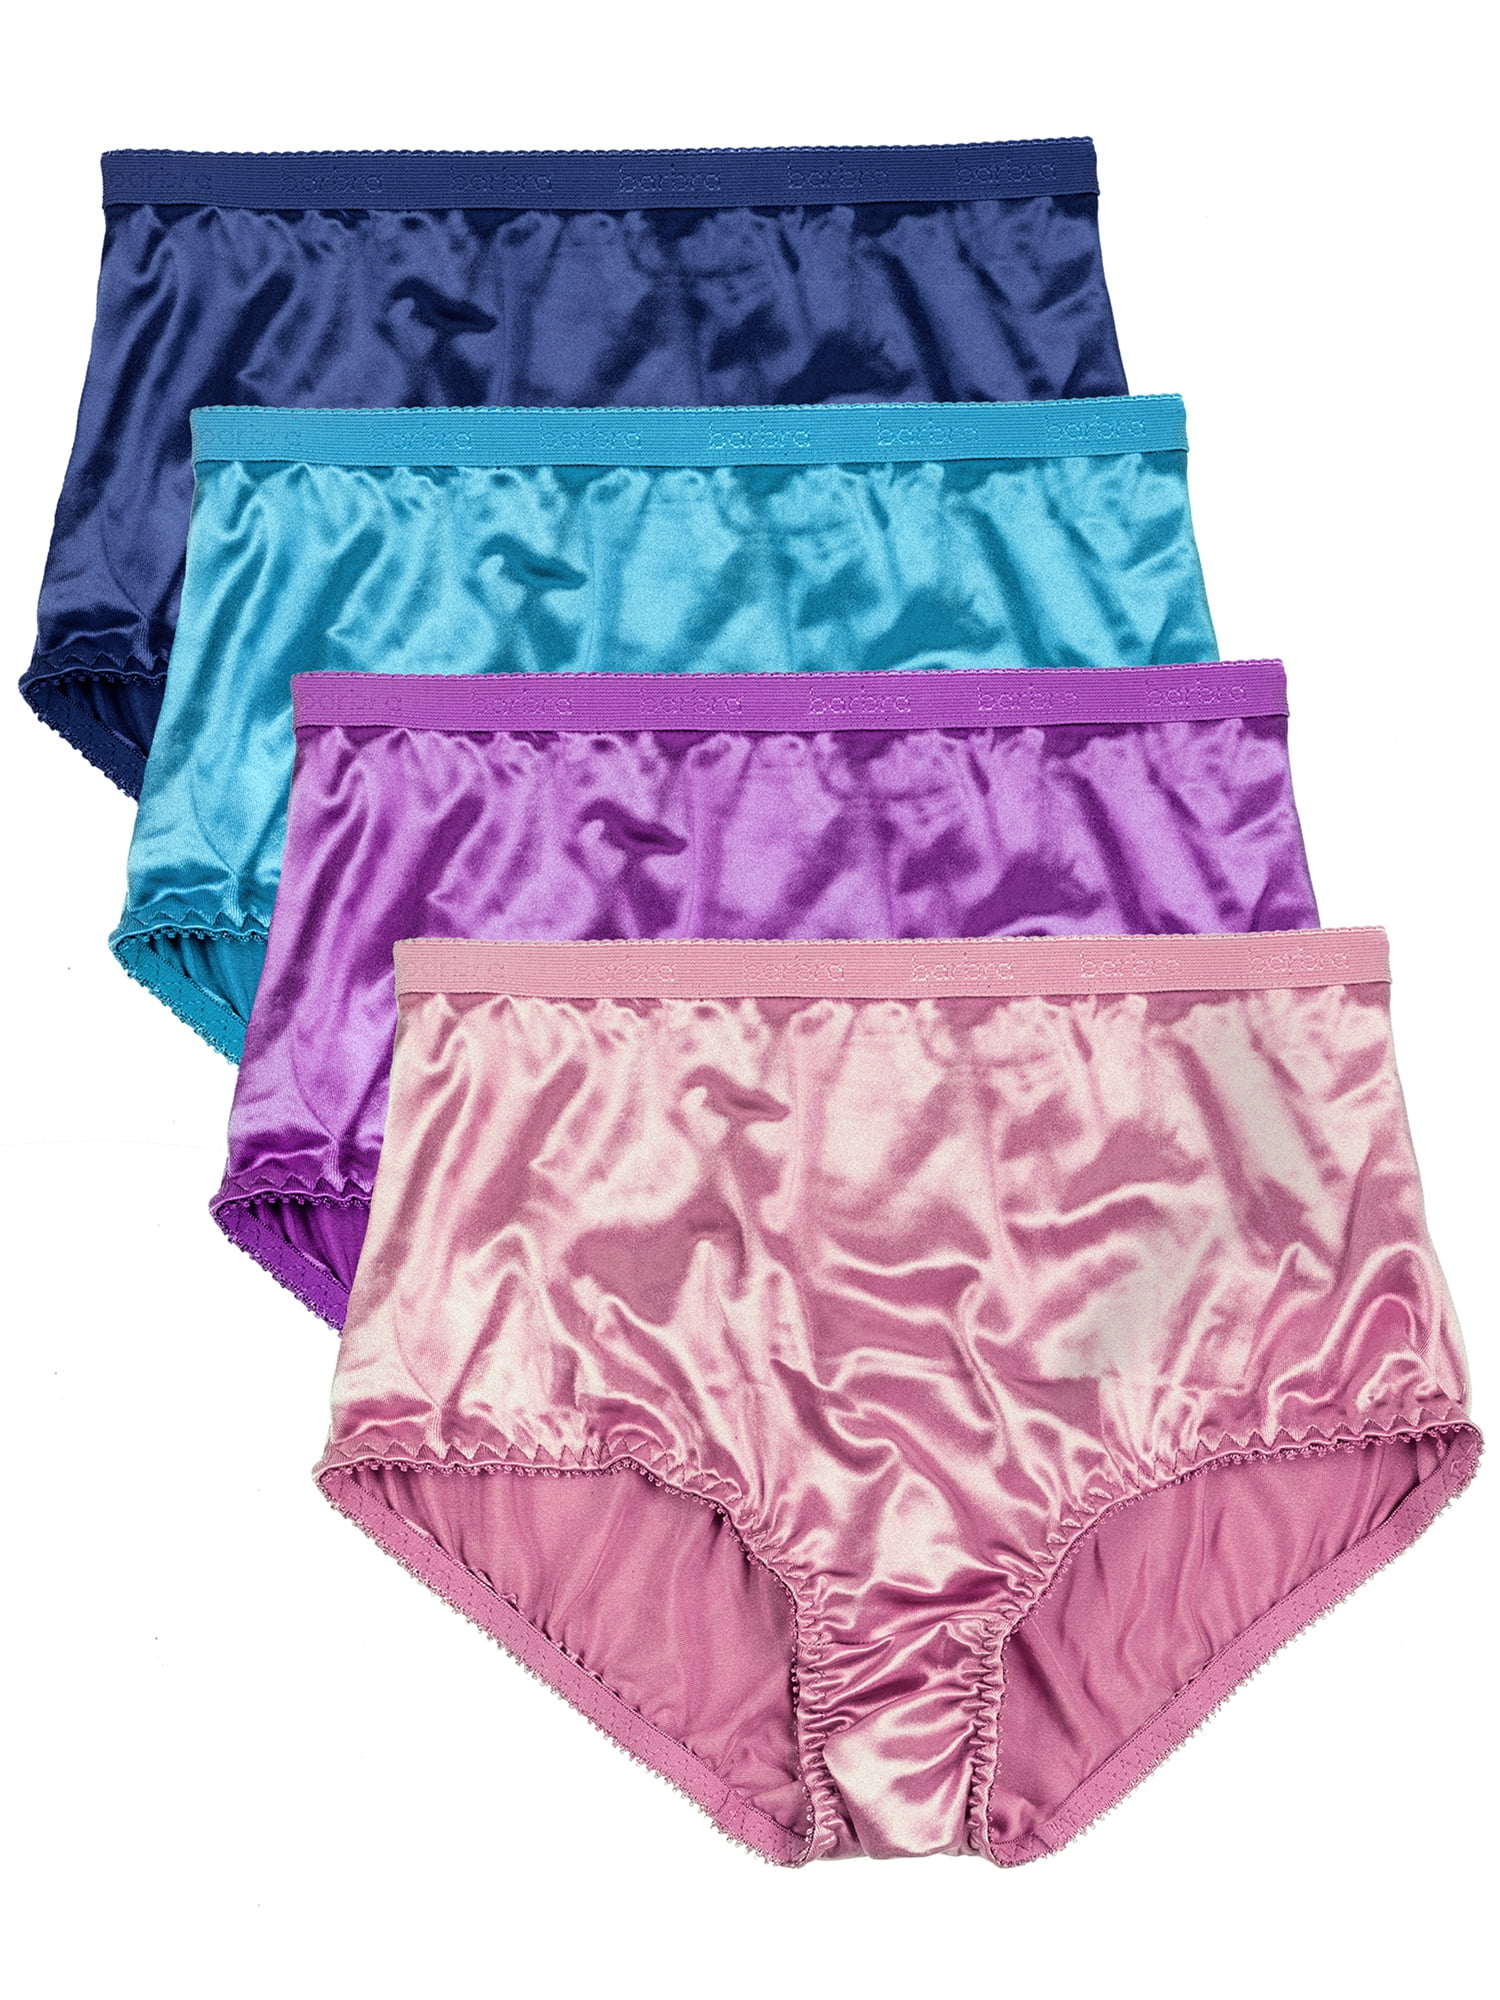 Barbra Women S Panties Full Coverage Satin Brief Small To Plus Sizes Multi Pack Walmart Com